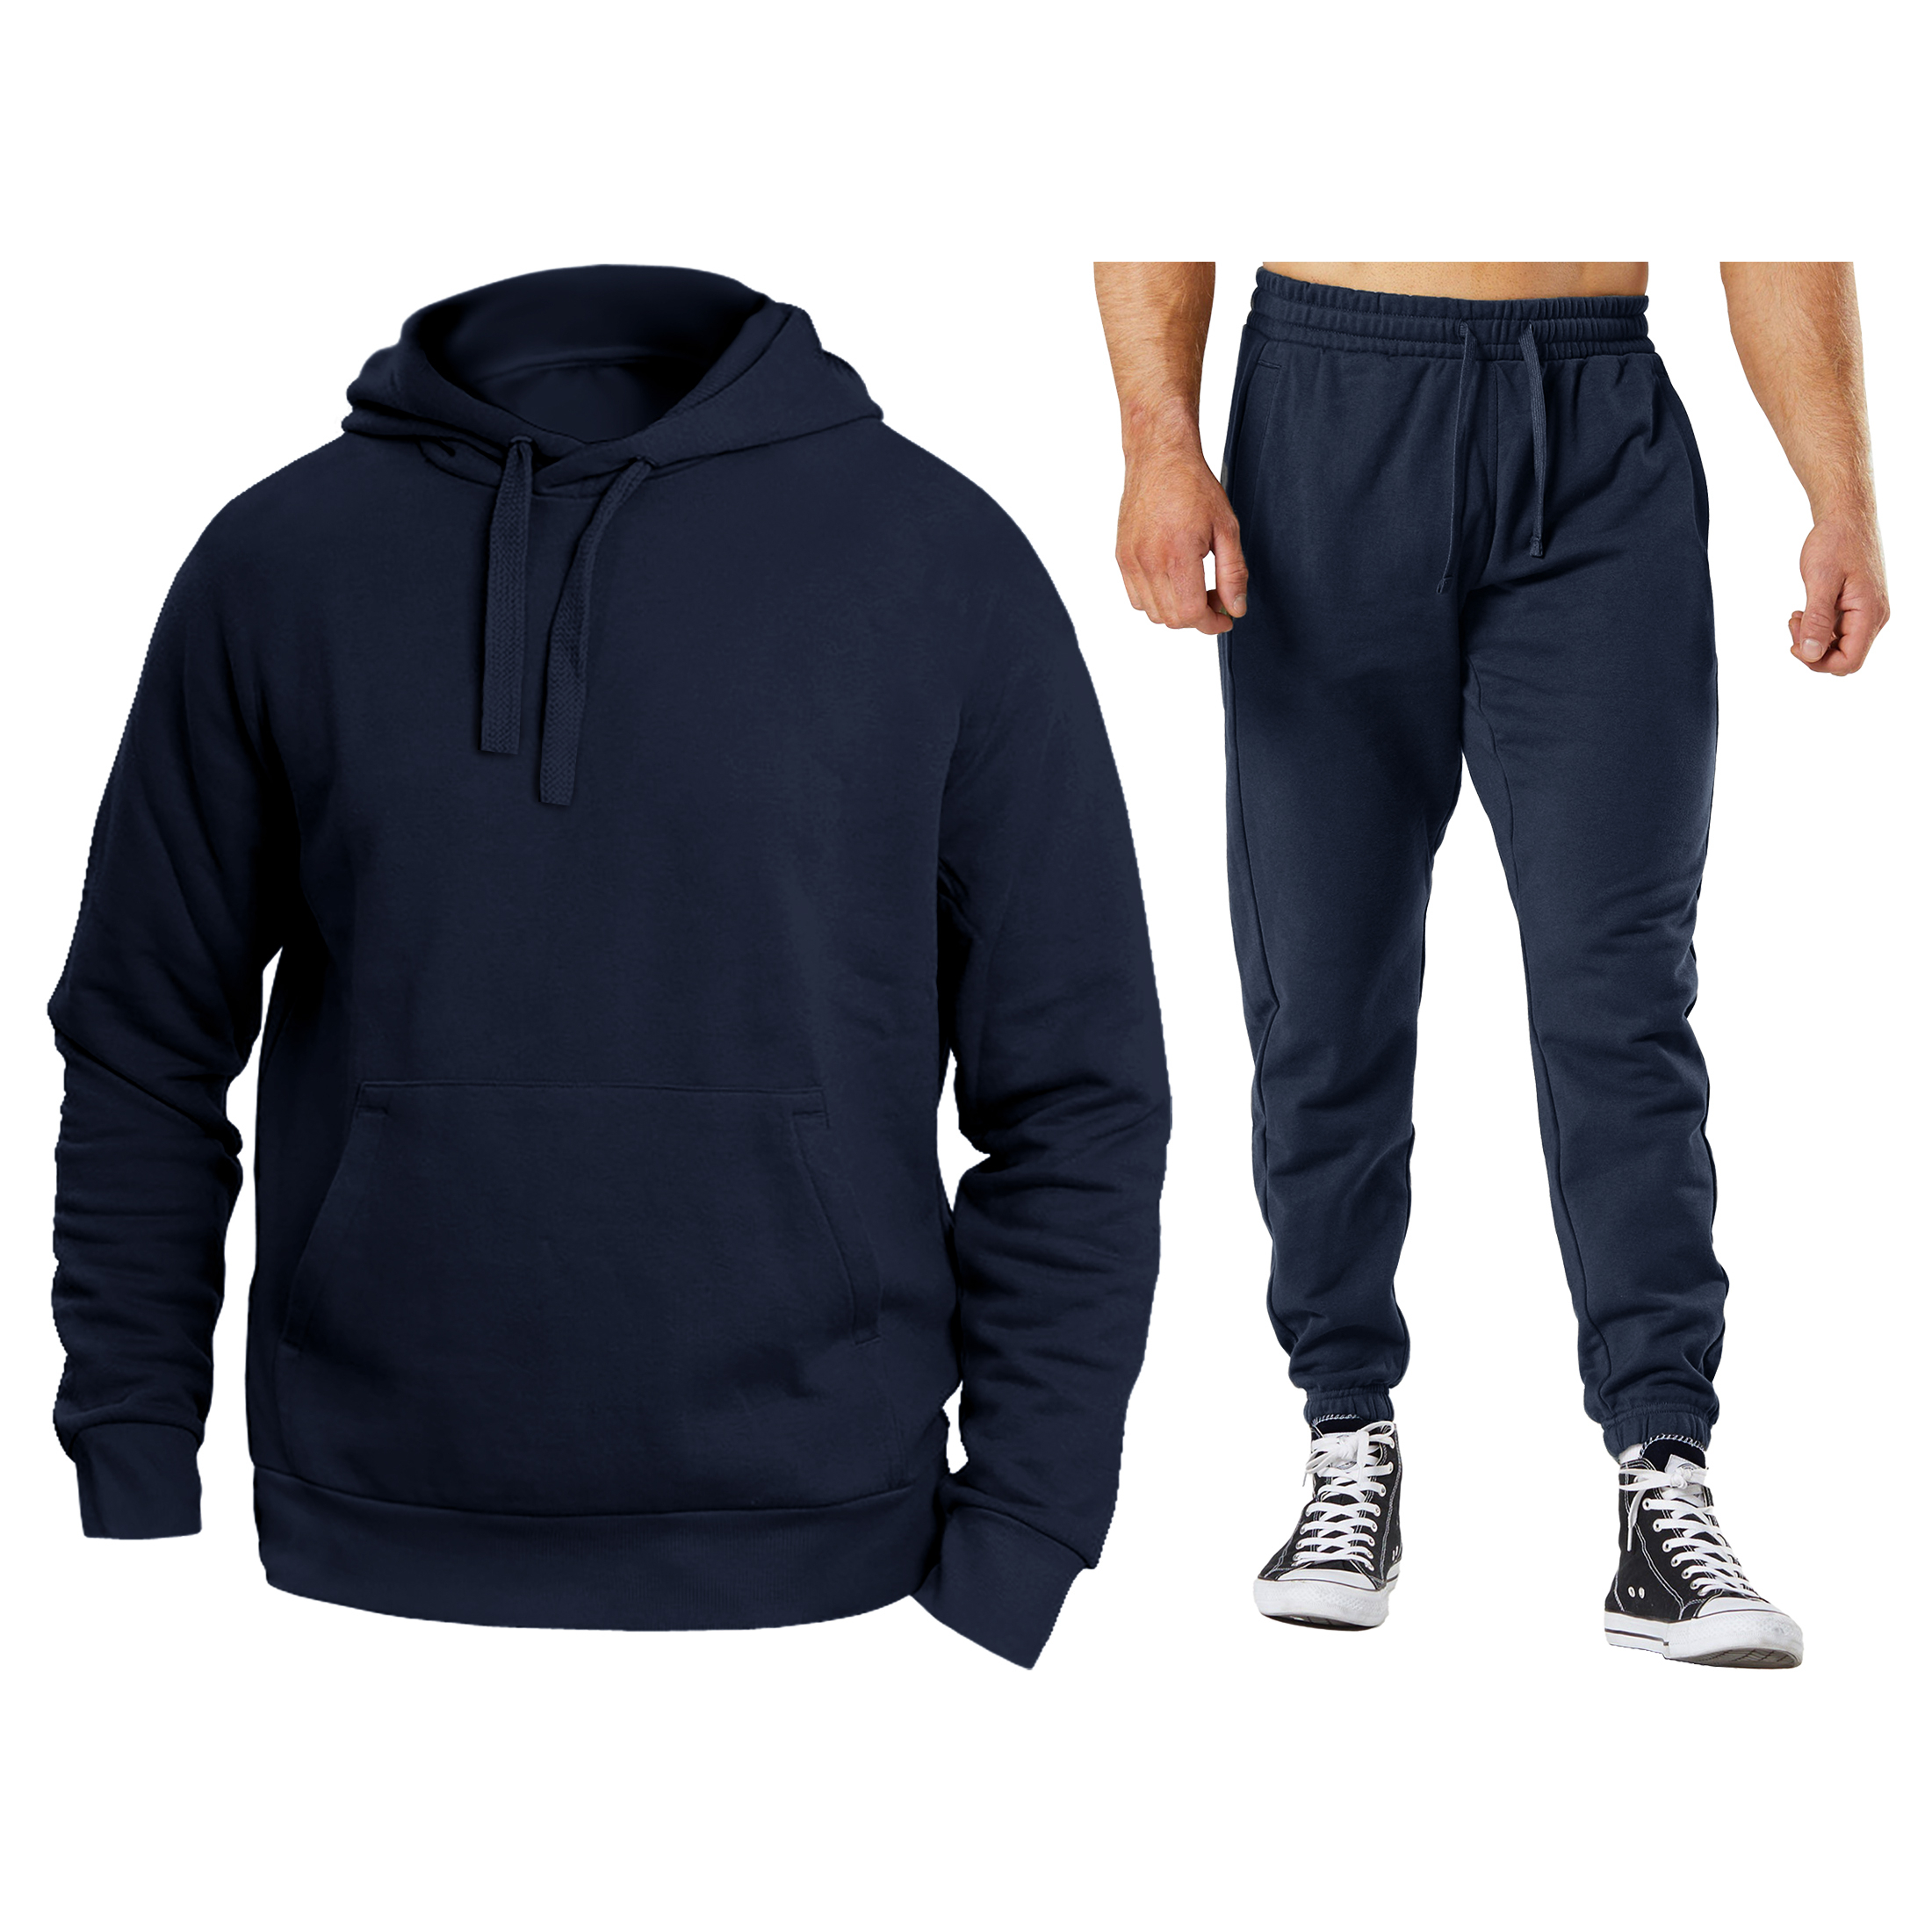 Men's Athletic Warm Jogging Pullover Active Sweatsuit - Navy, Large